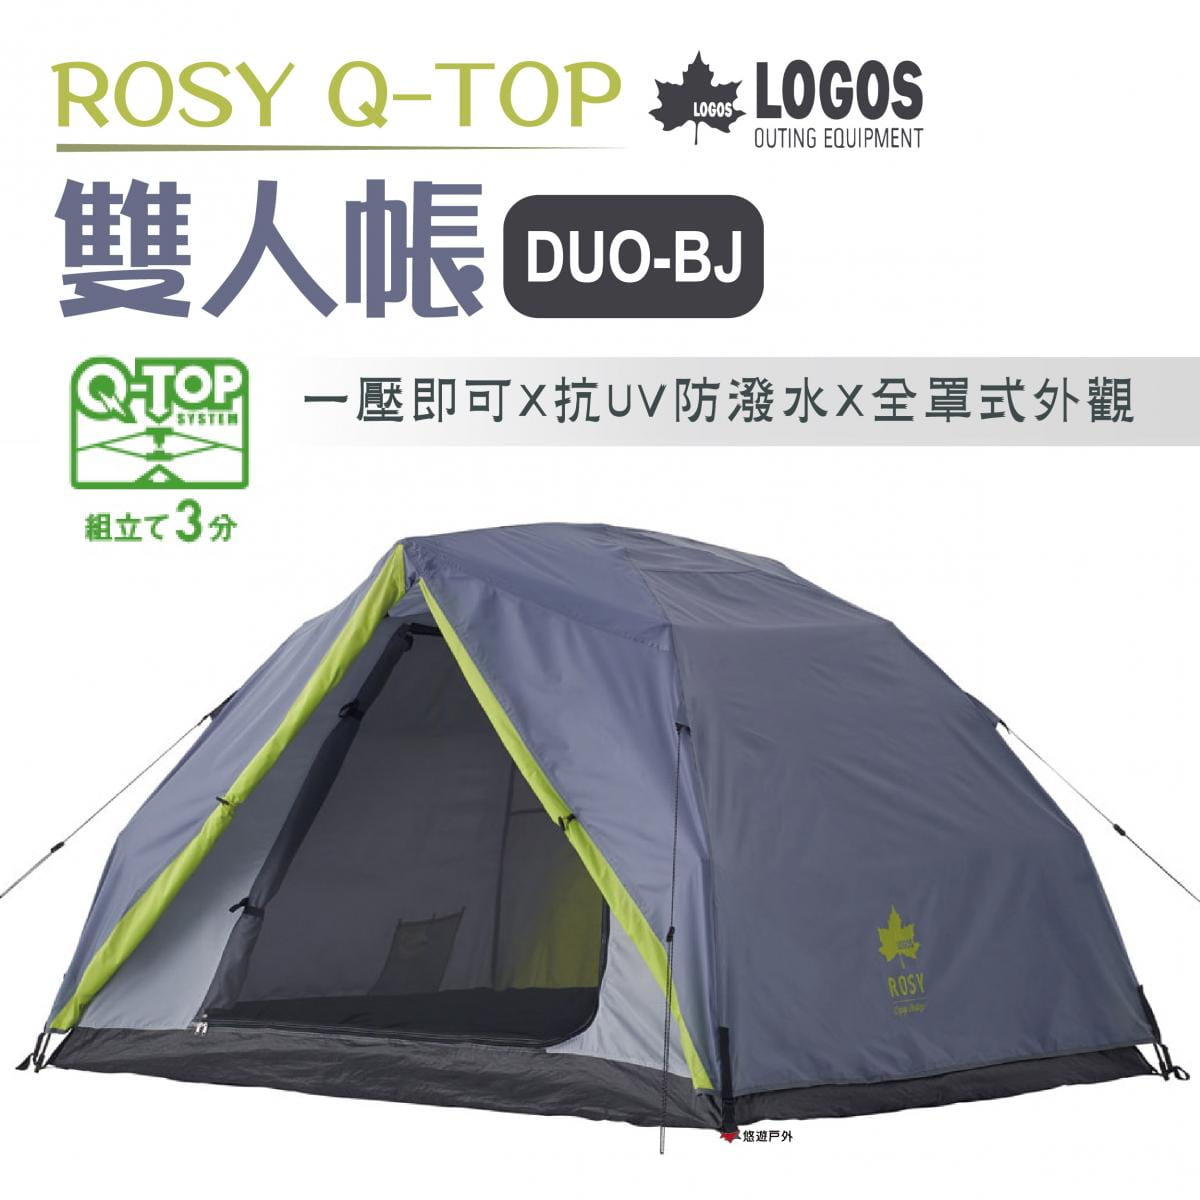 【LOGOS】ROSY Q-TOP 雙人帳 DUO-BJ_LG71805564 (悠遊戶外) 0